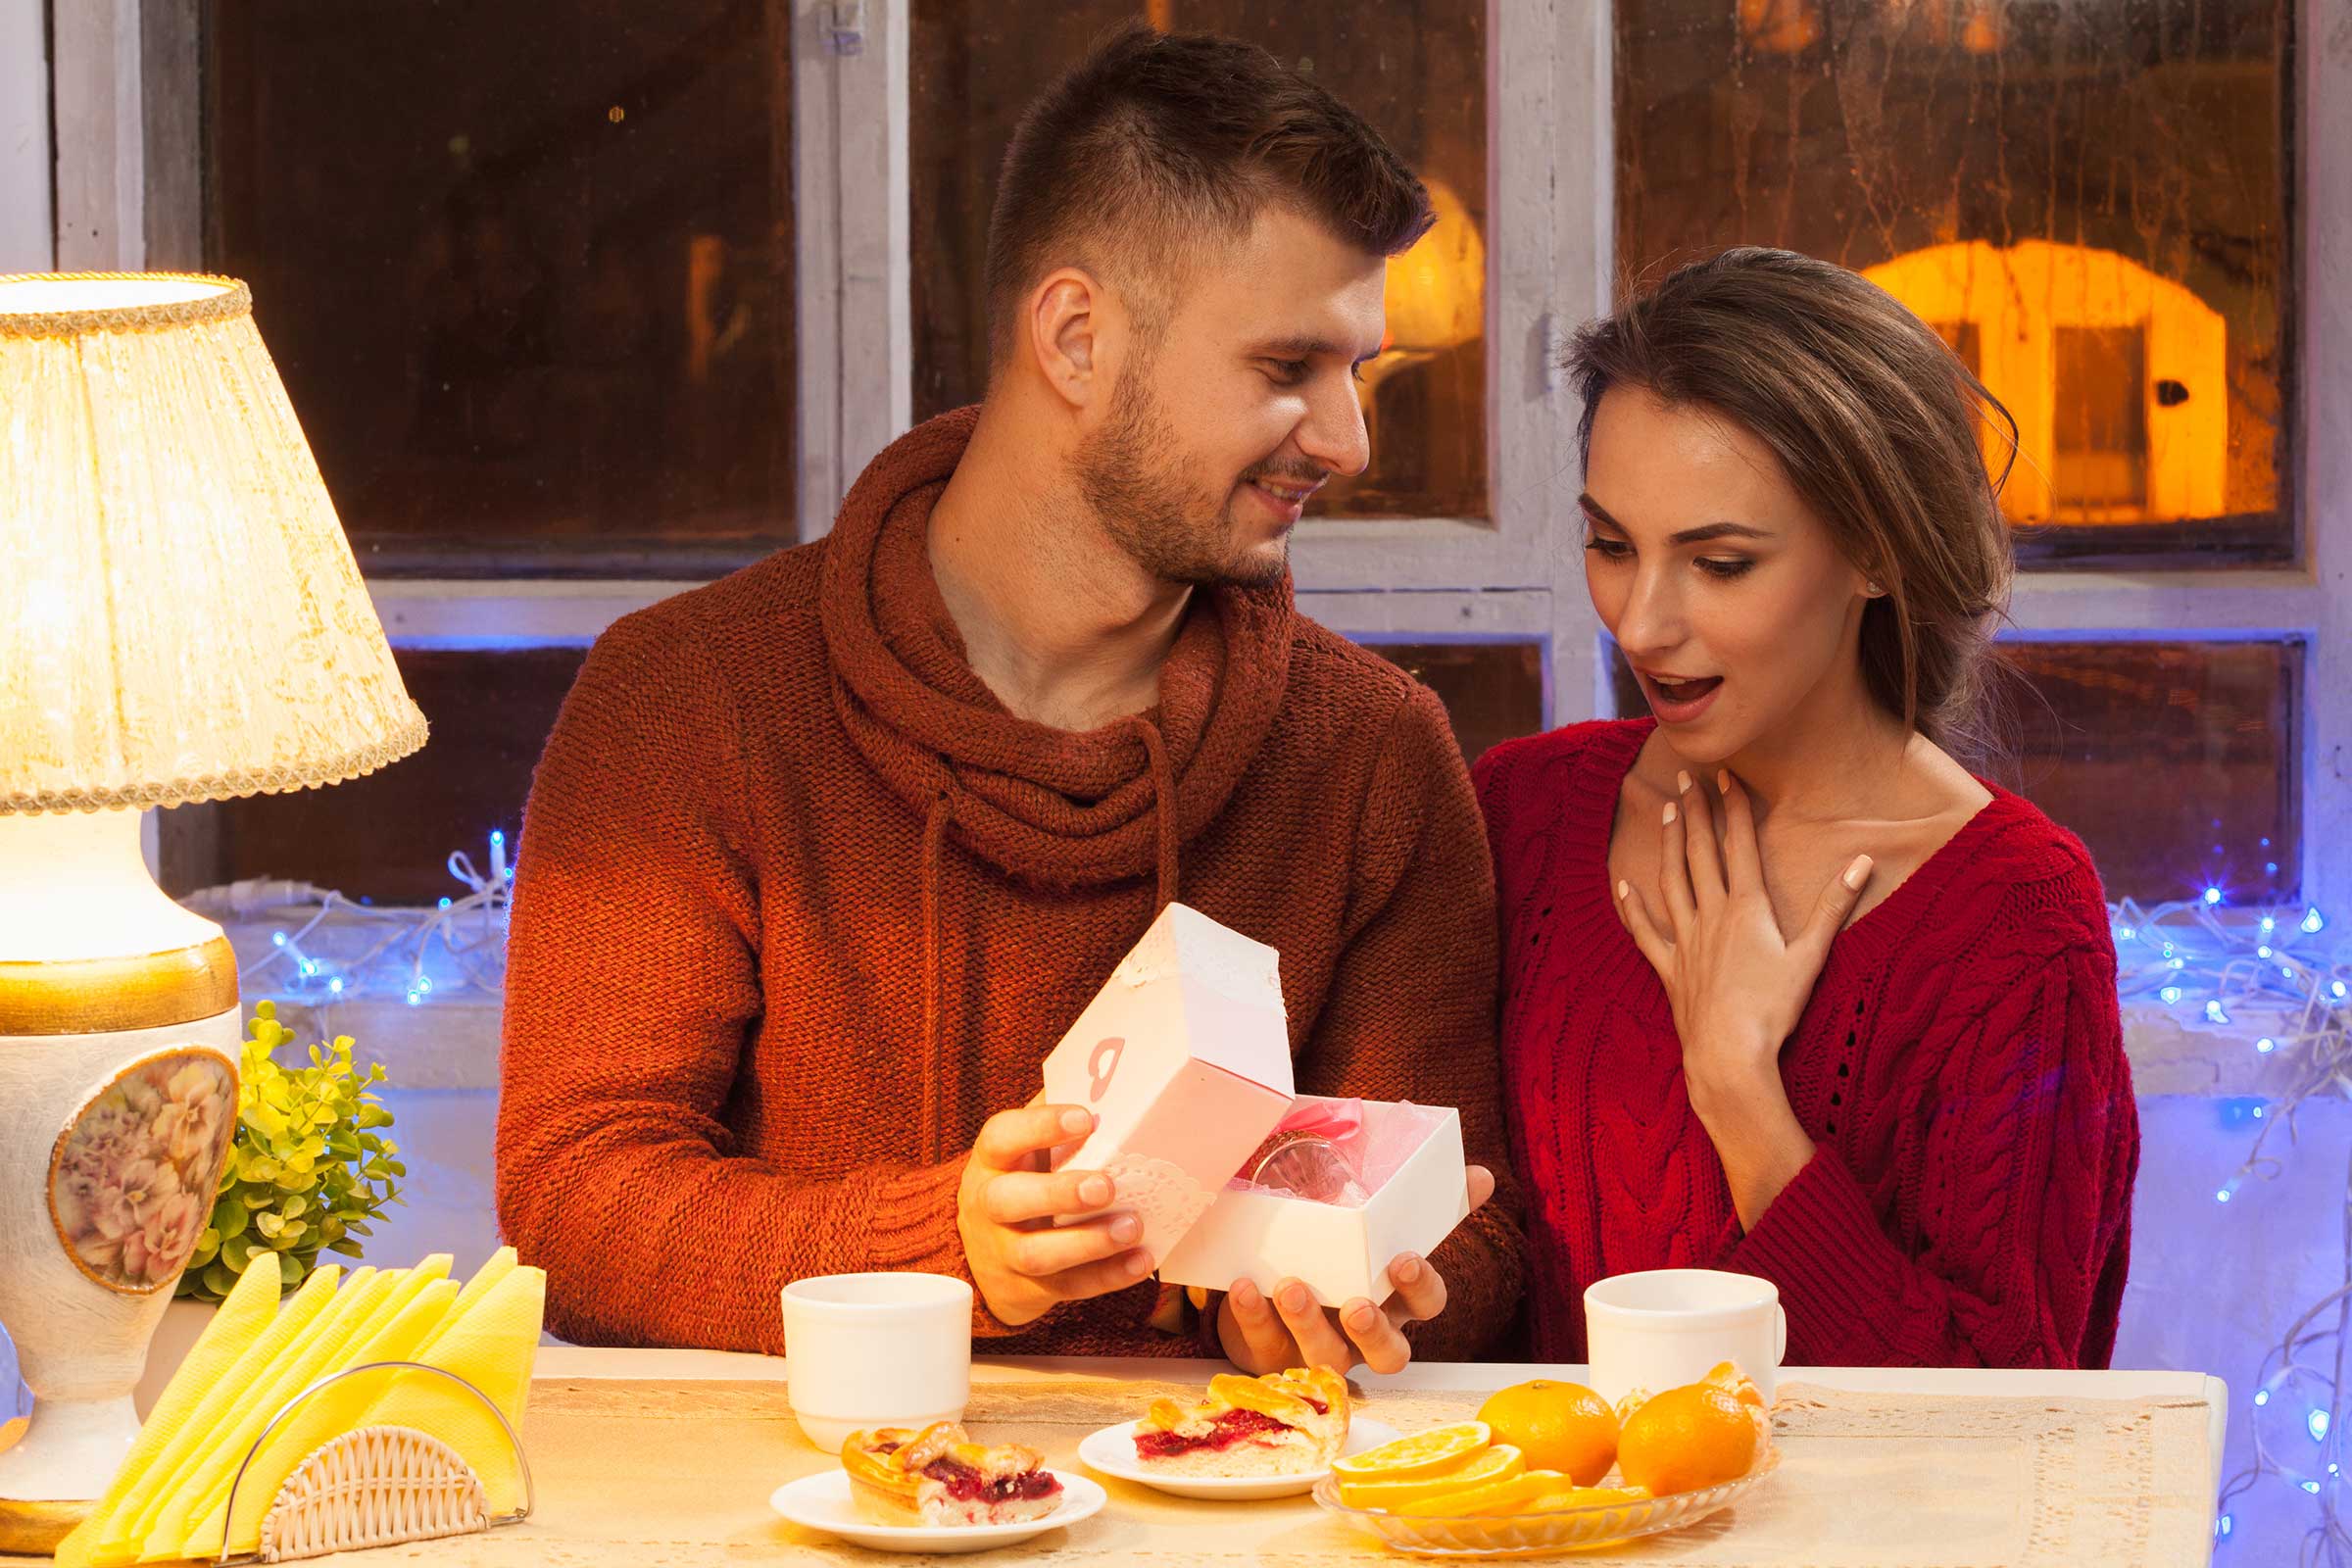 Top 6 Romantic Dinner Ideas